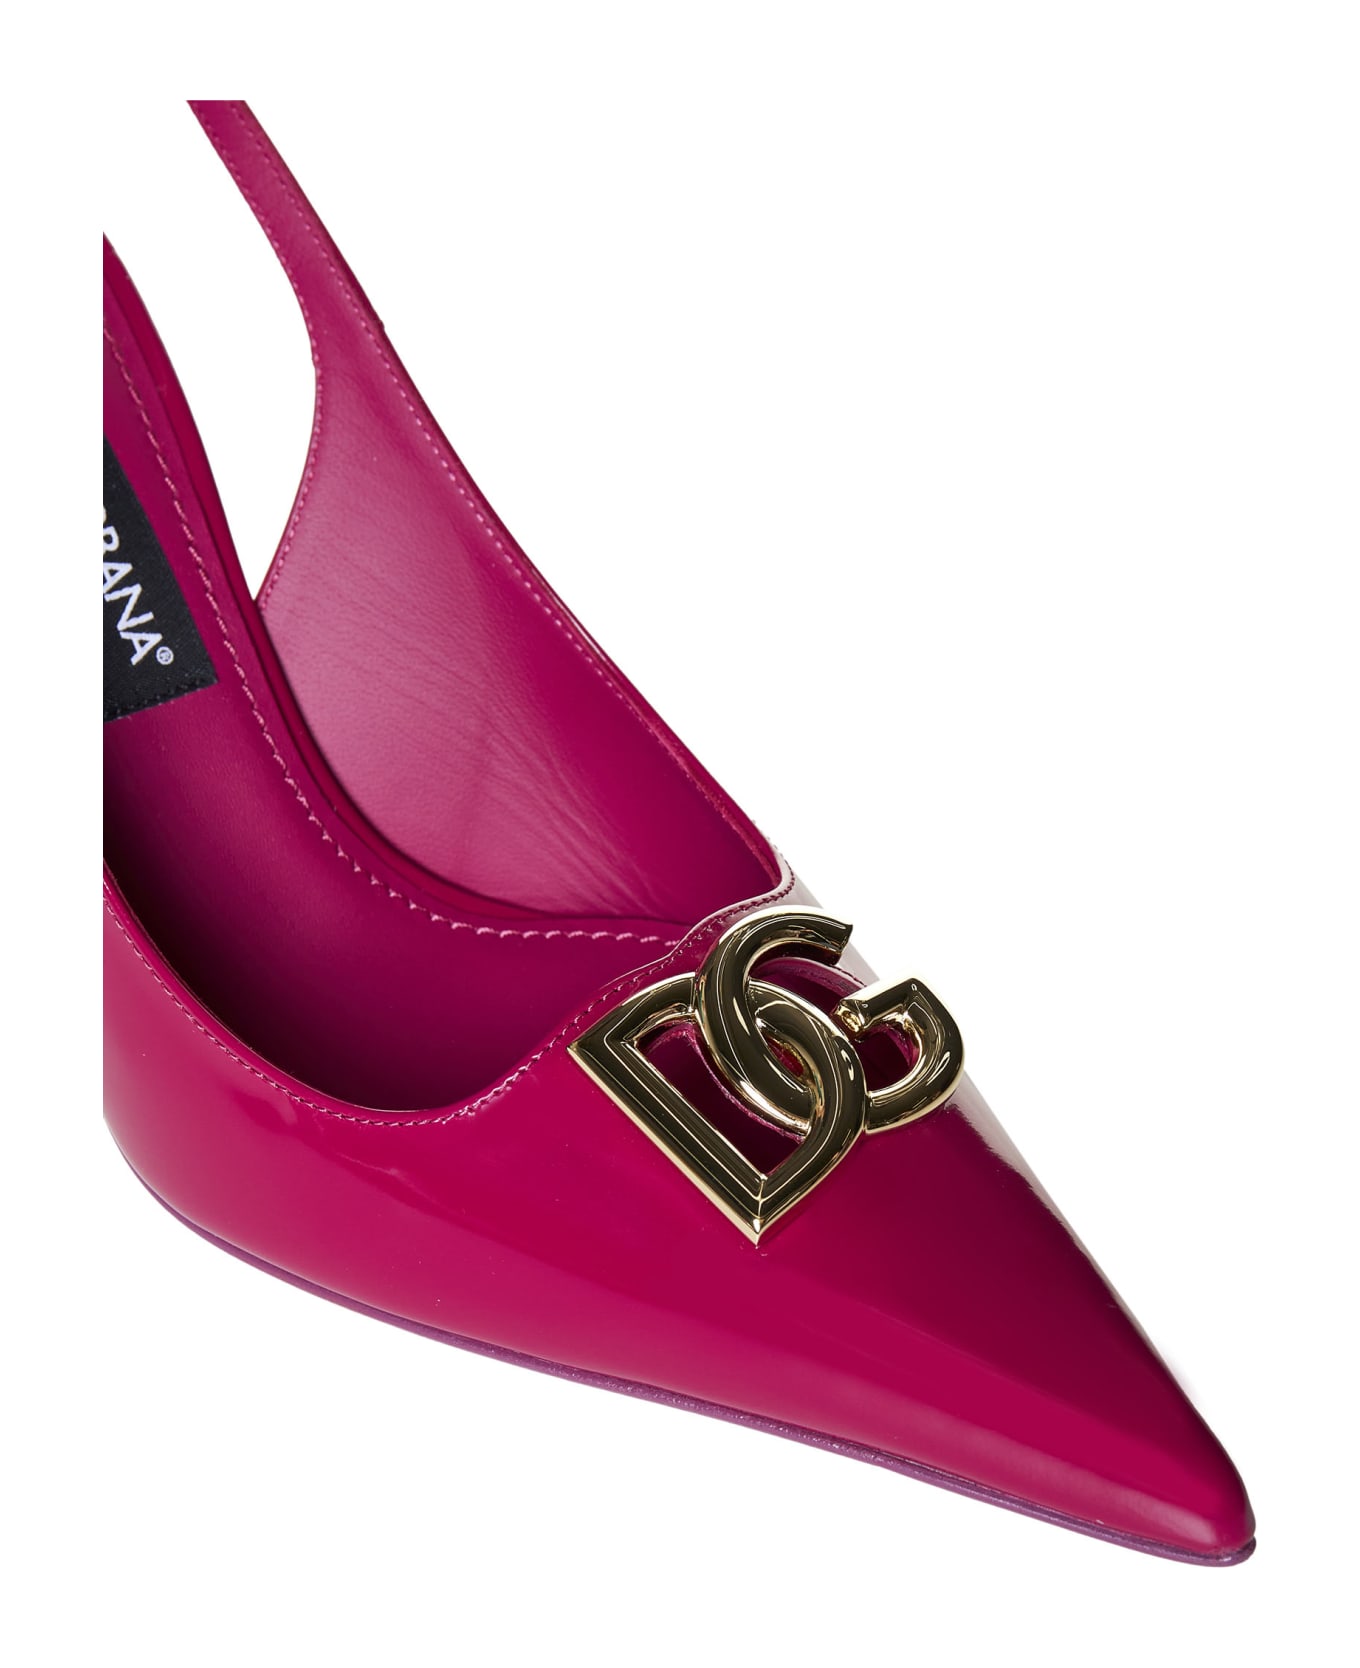 Dolce & Gabbana Leather Slingback Pumps - Pink ハイヒール